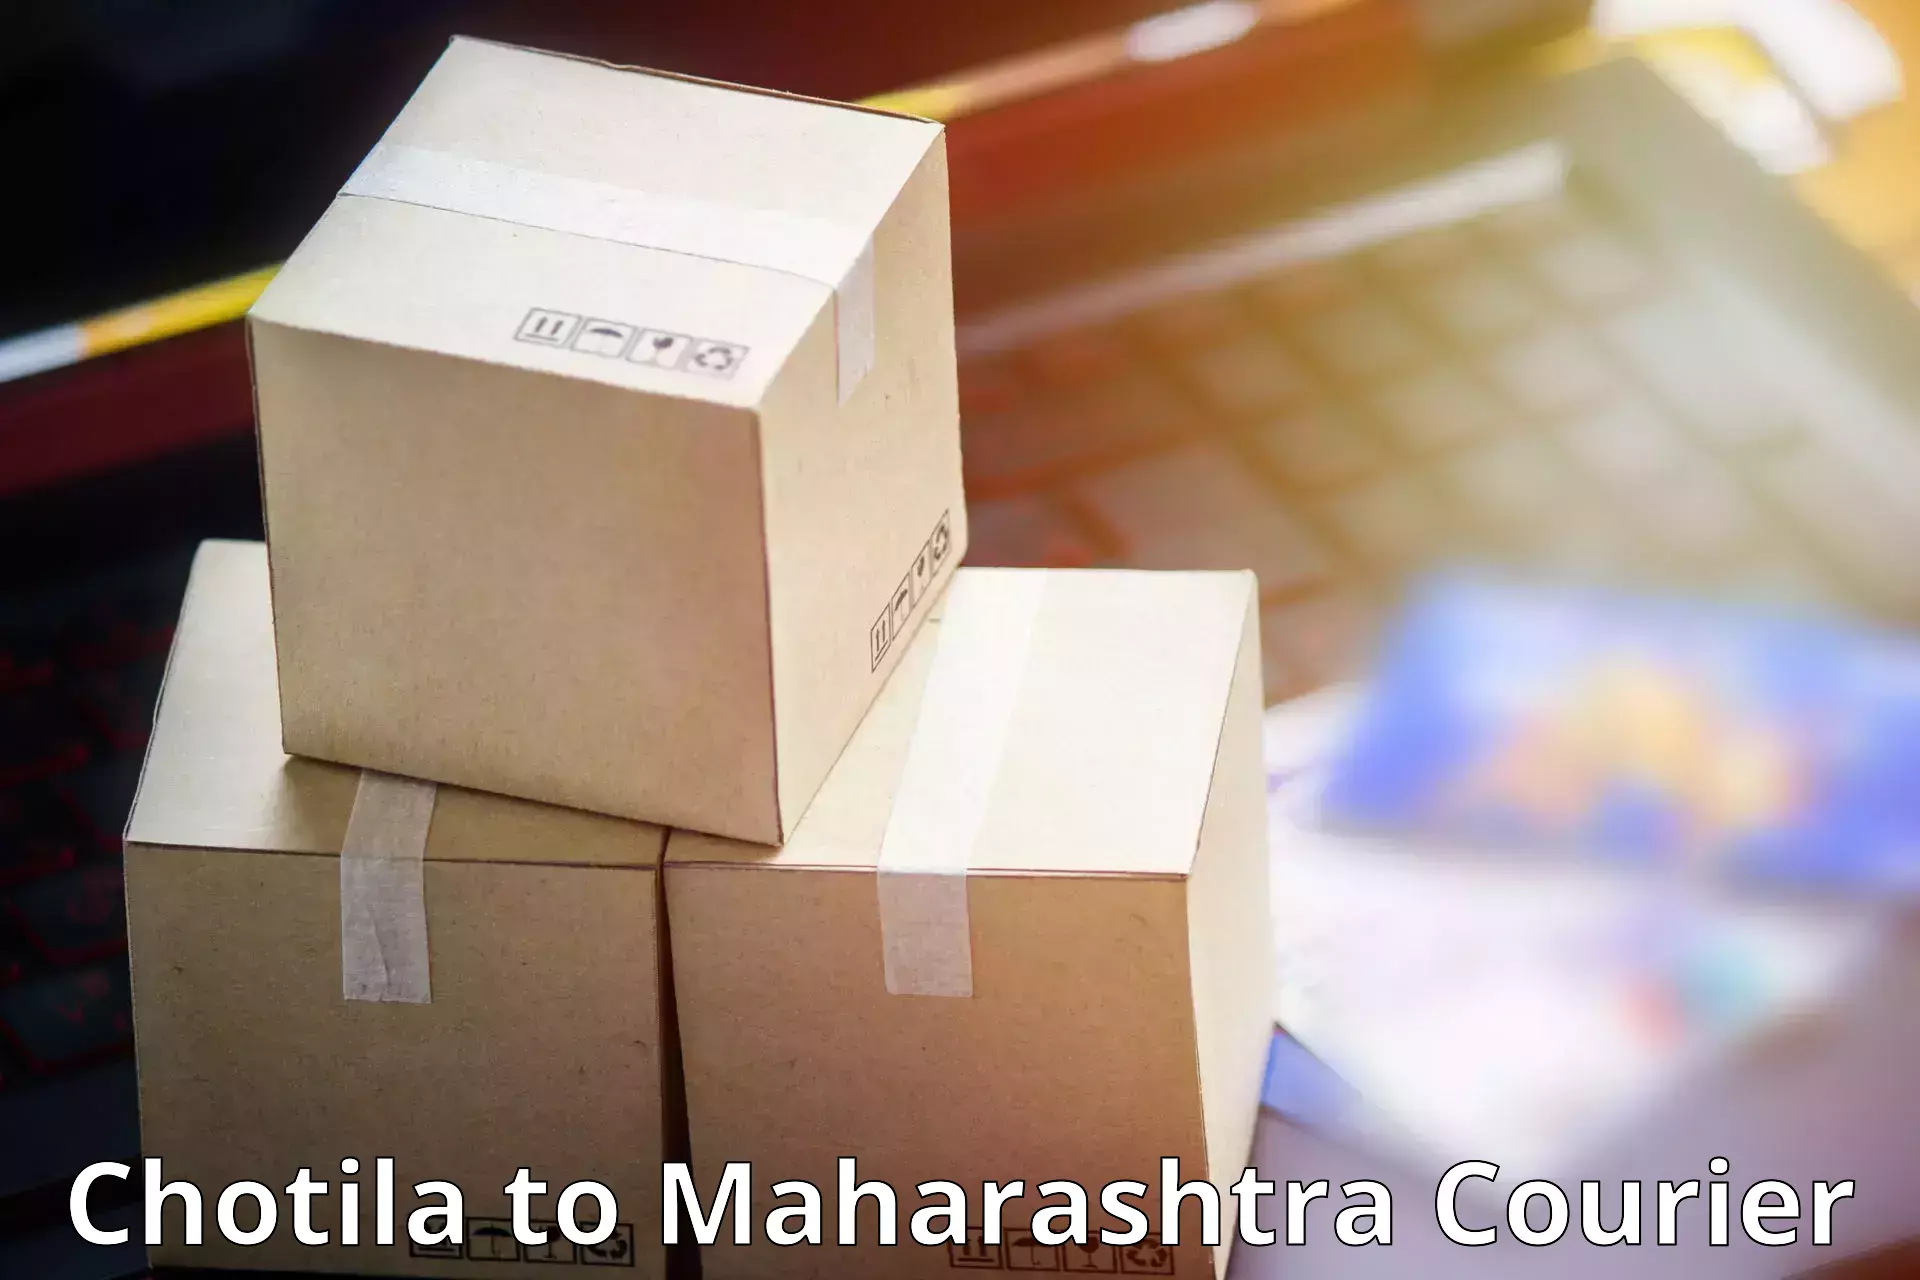 Courier service partnerships Chotila to Akkalkot